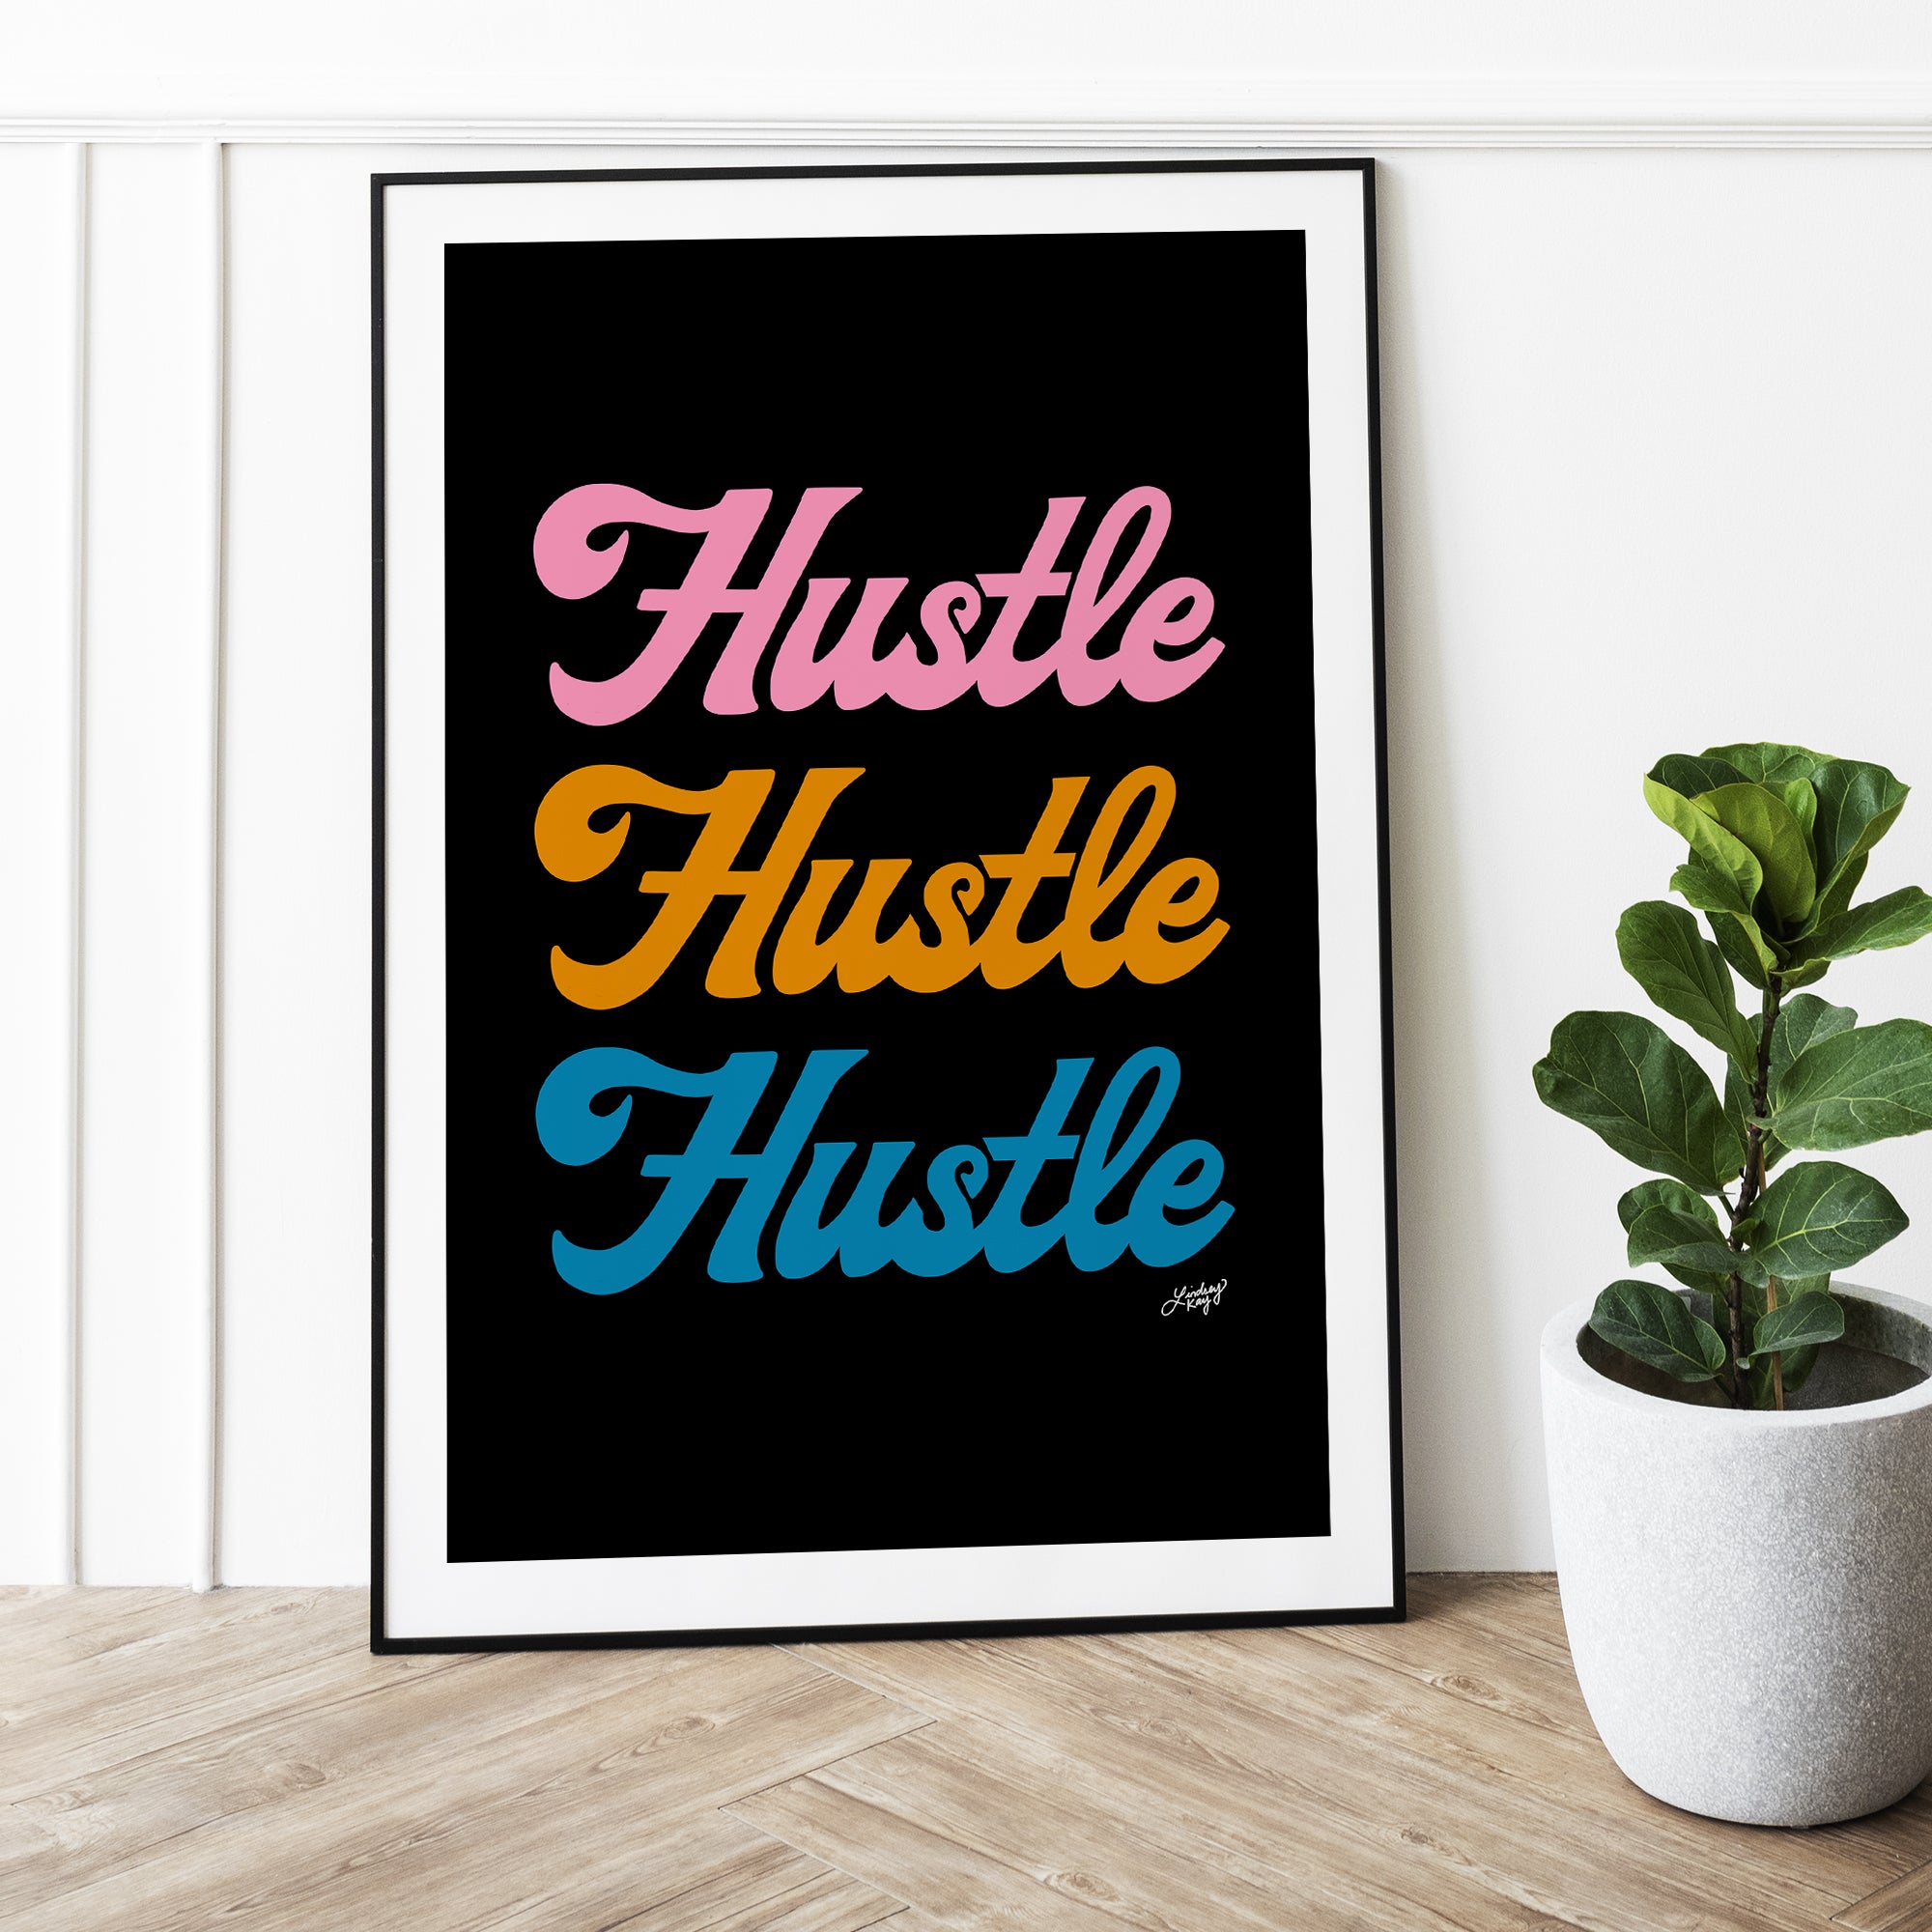 Hustle Hustle Hustle (Palette rétro) - Impression d’art